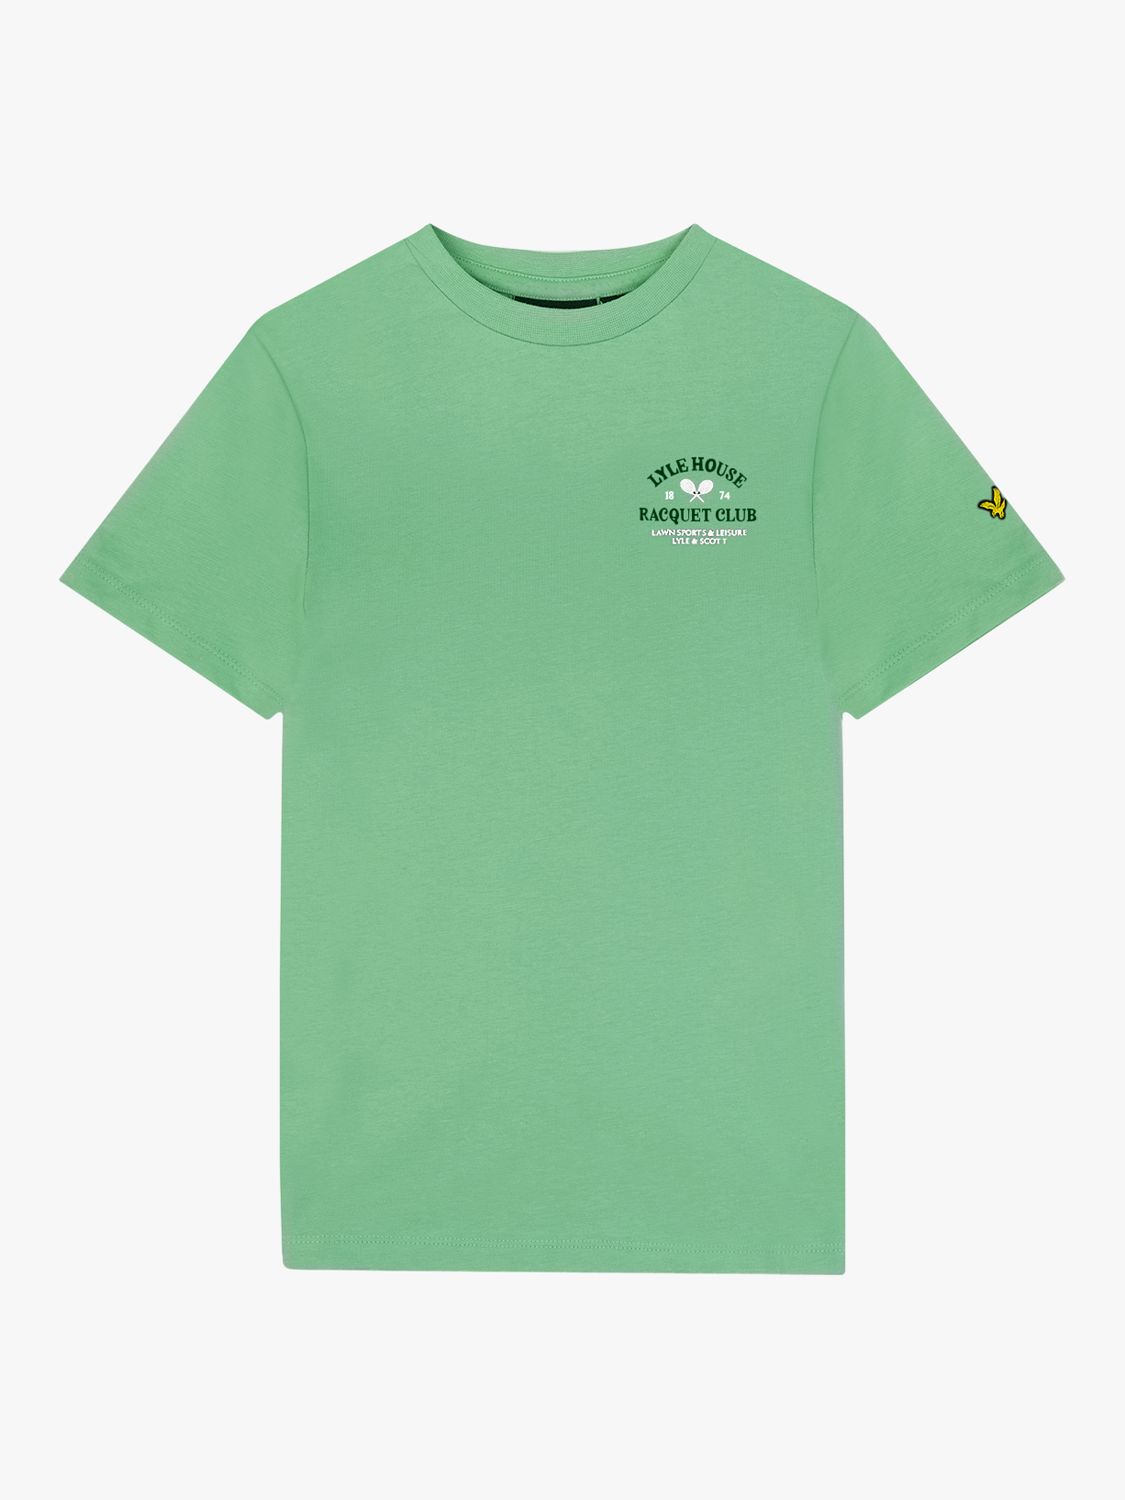 Lyle & Scott Kids' Racquet Club Graphic T-Shirt, Lawn Green, 15-16 years